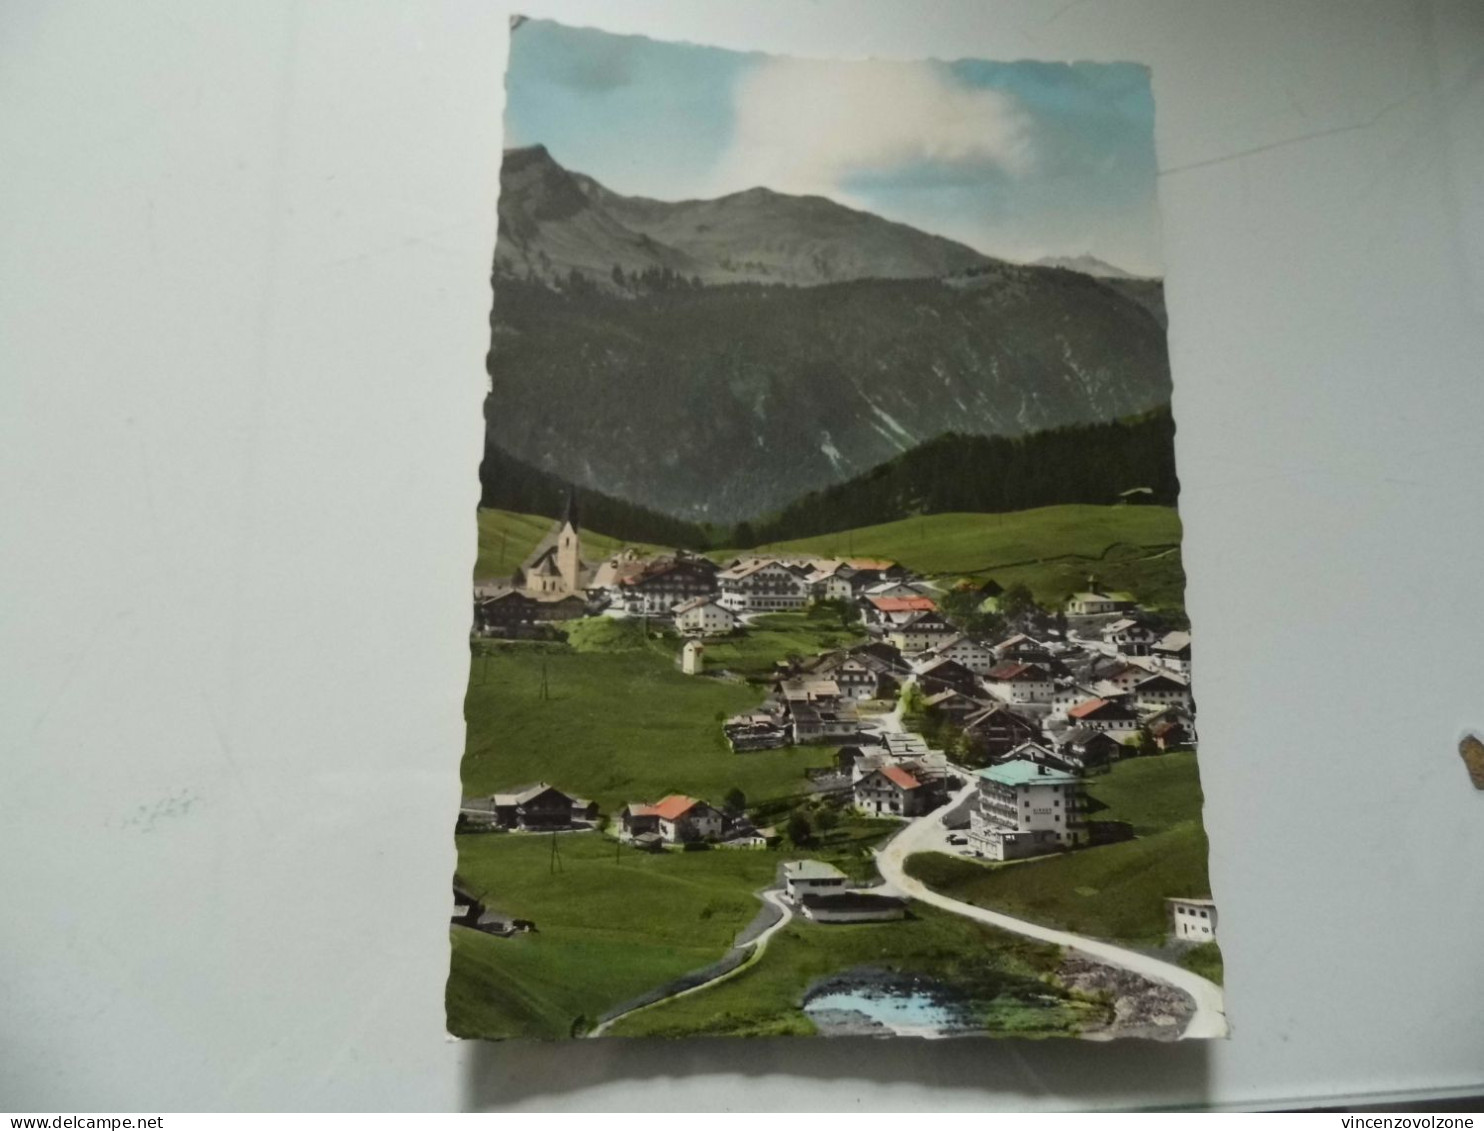 Cartolina Viaggiata "BERWANG In Tirol" 1975 - Berwang